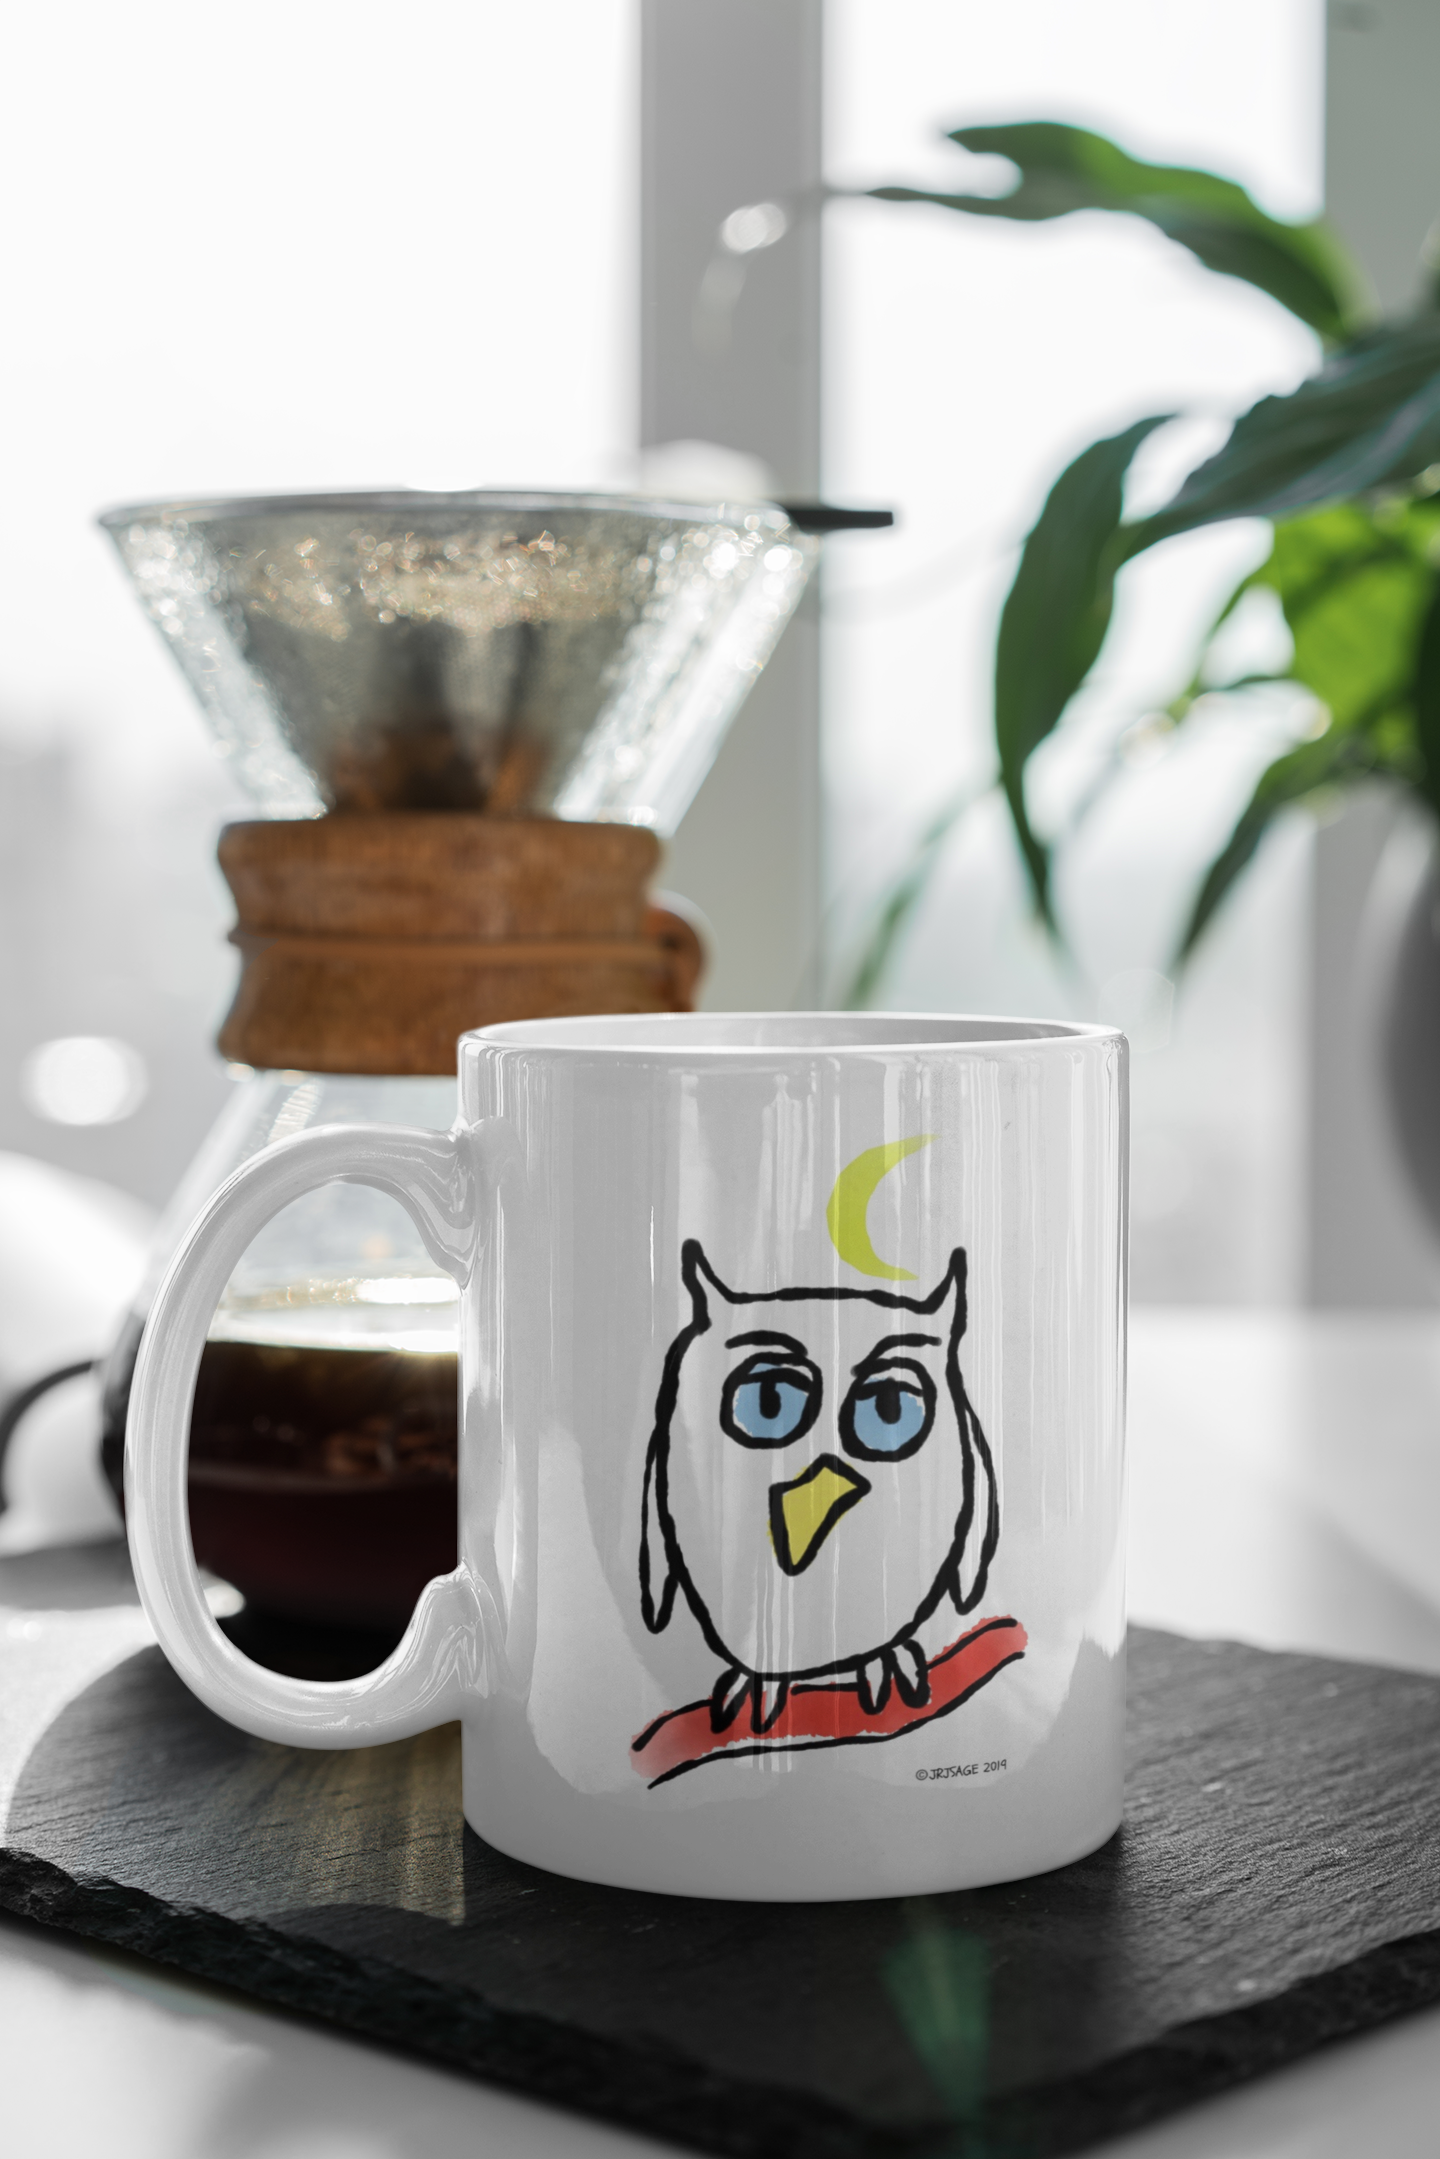 Night Owl Mug Illustrated cute owl mug design by Hector and Bone on a table